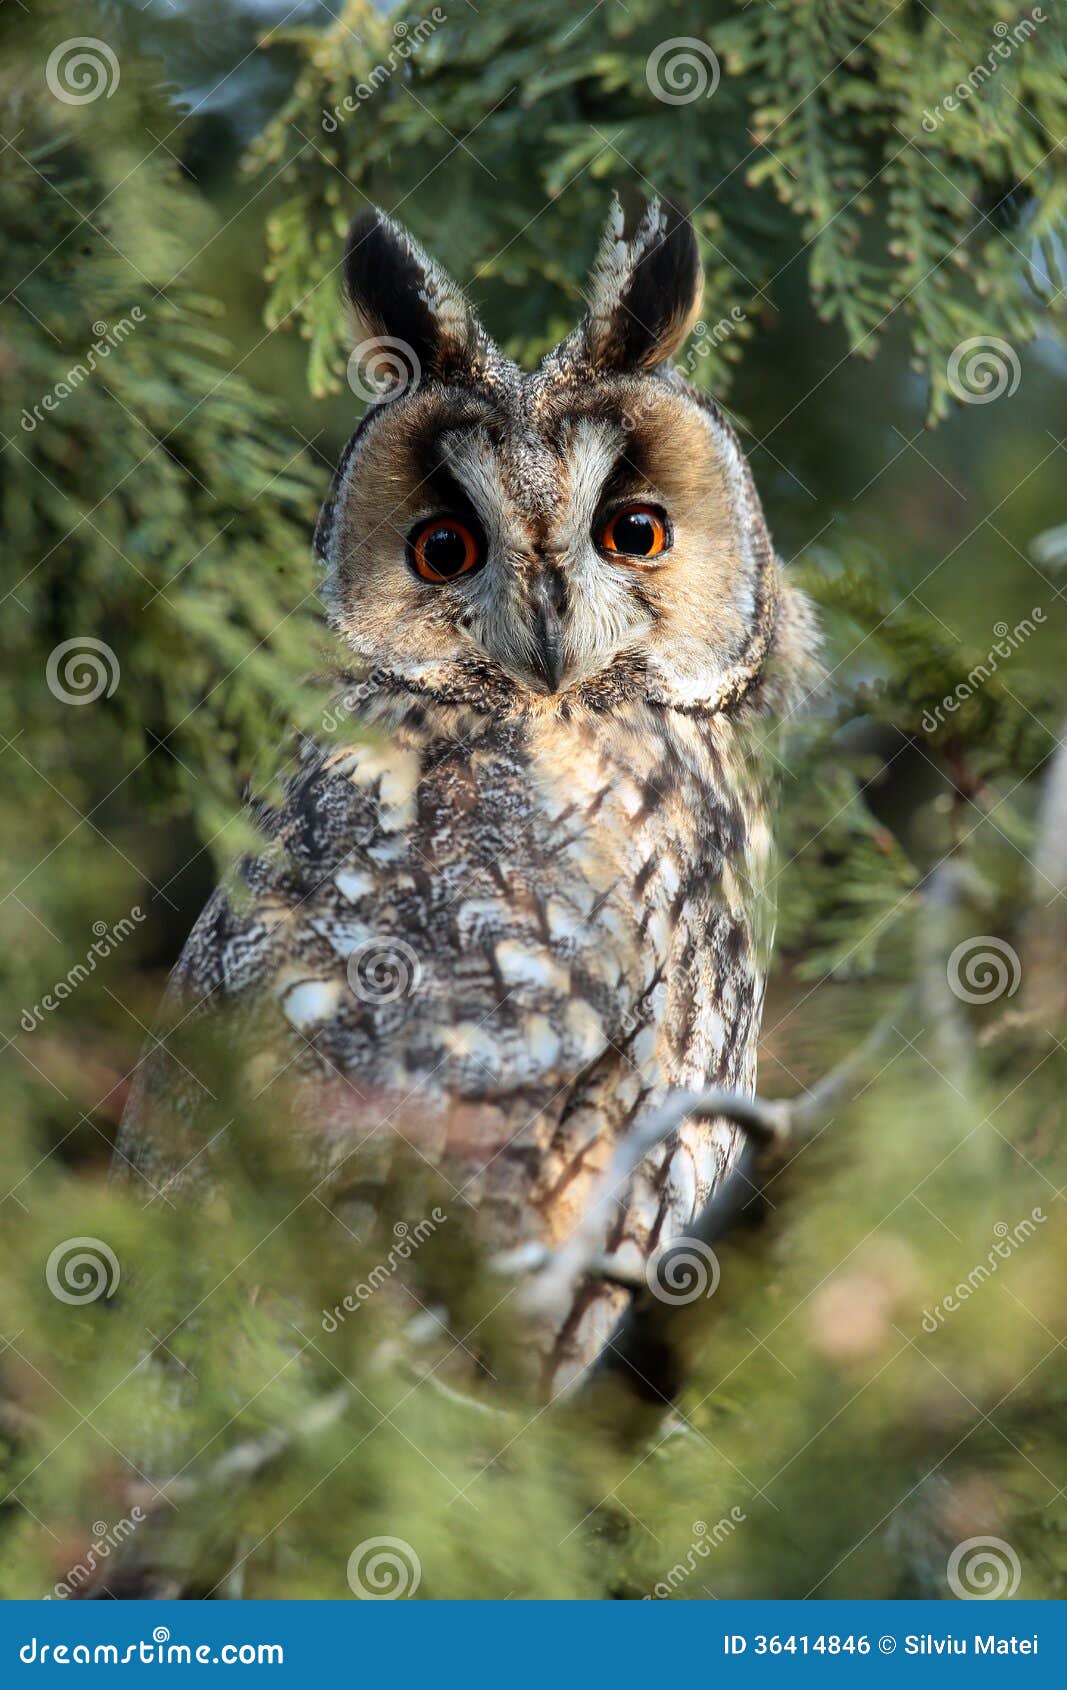 the long-eared owl (asio otus) on the tree